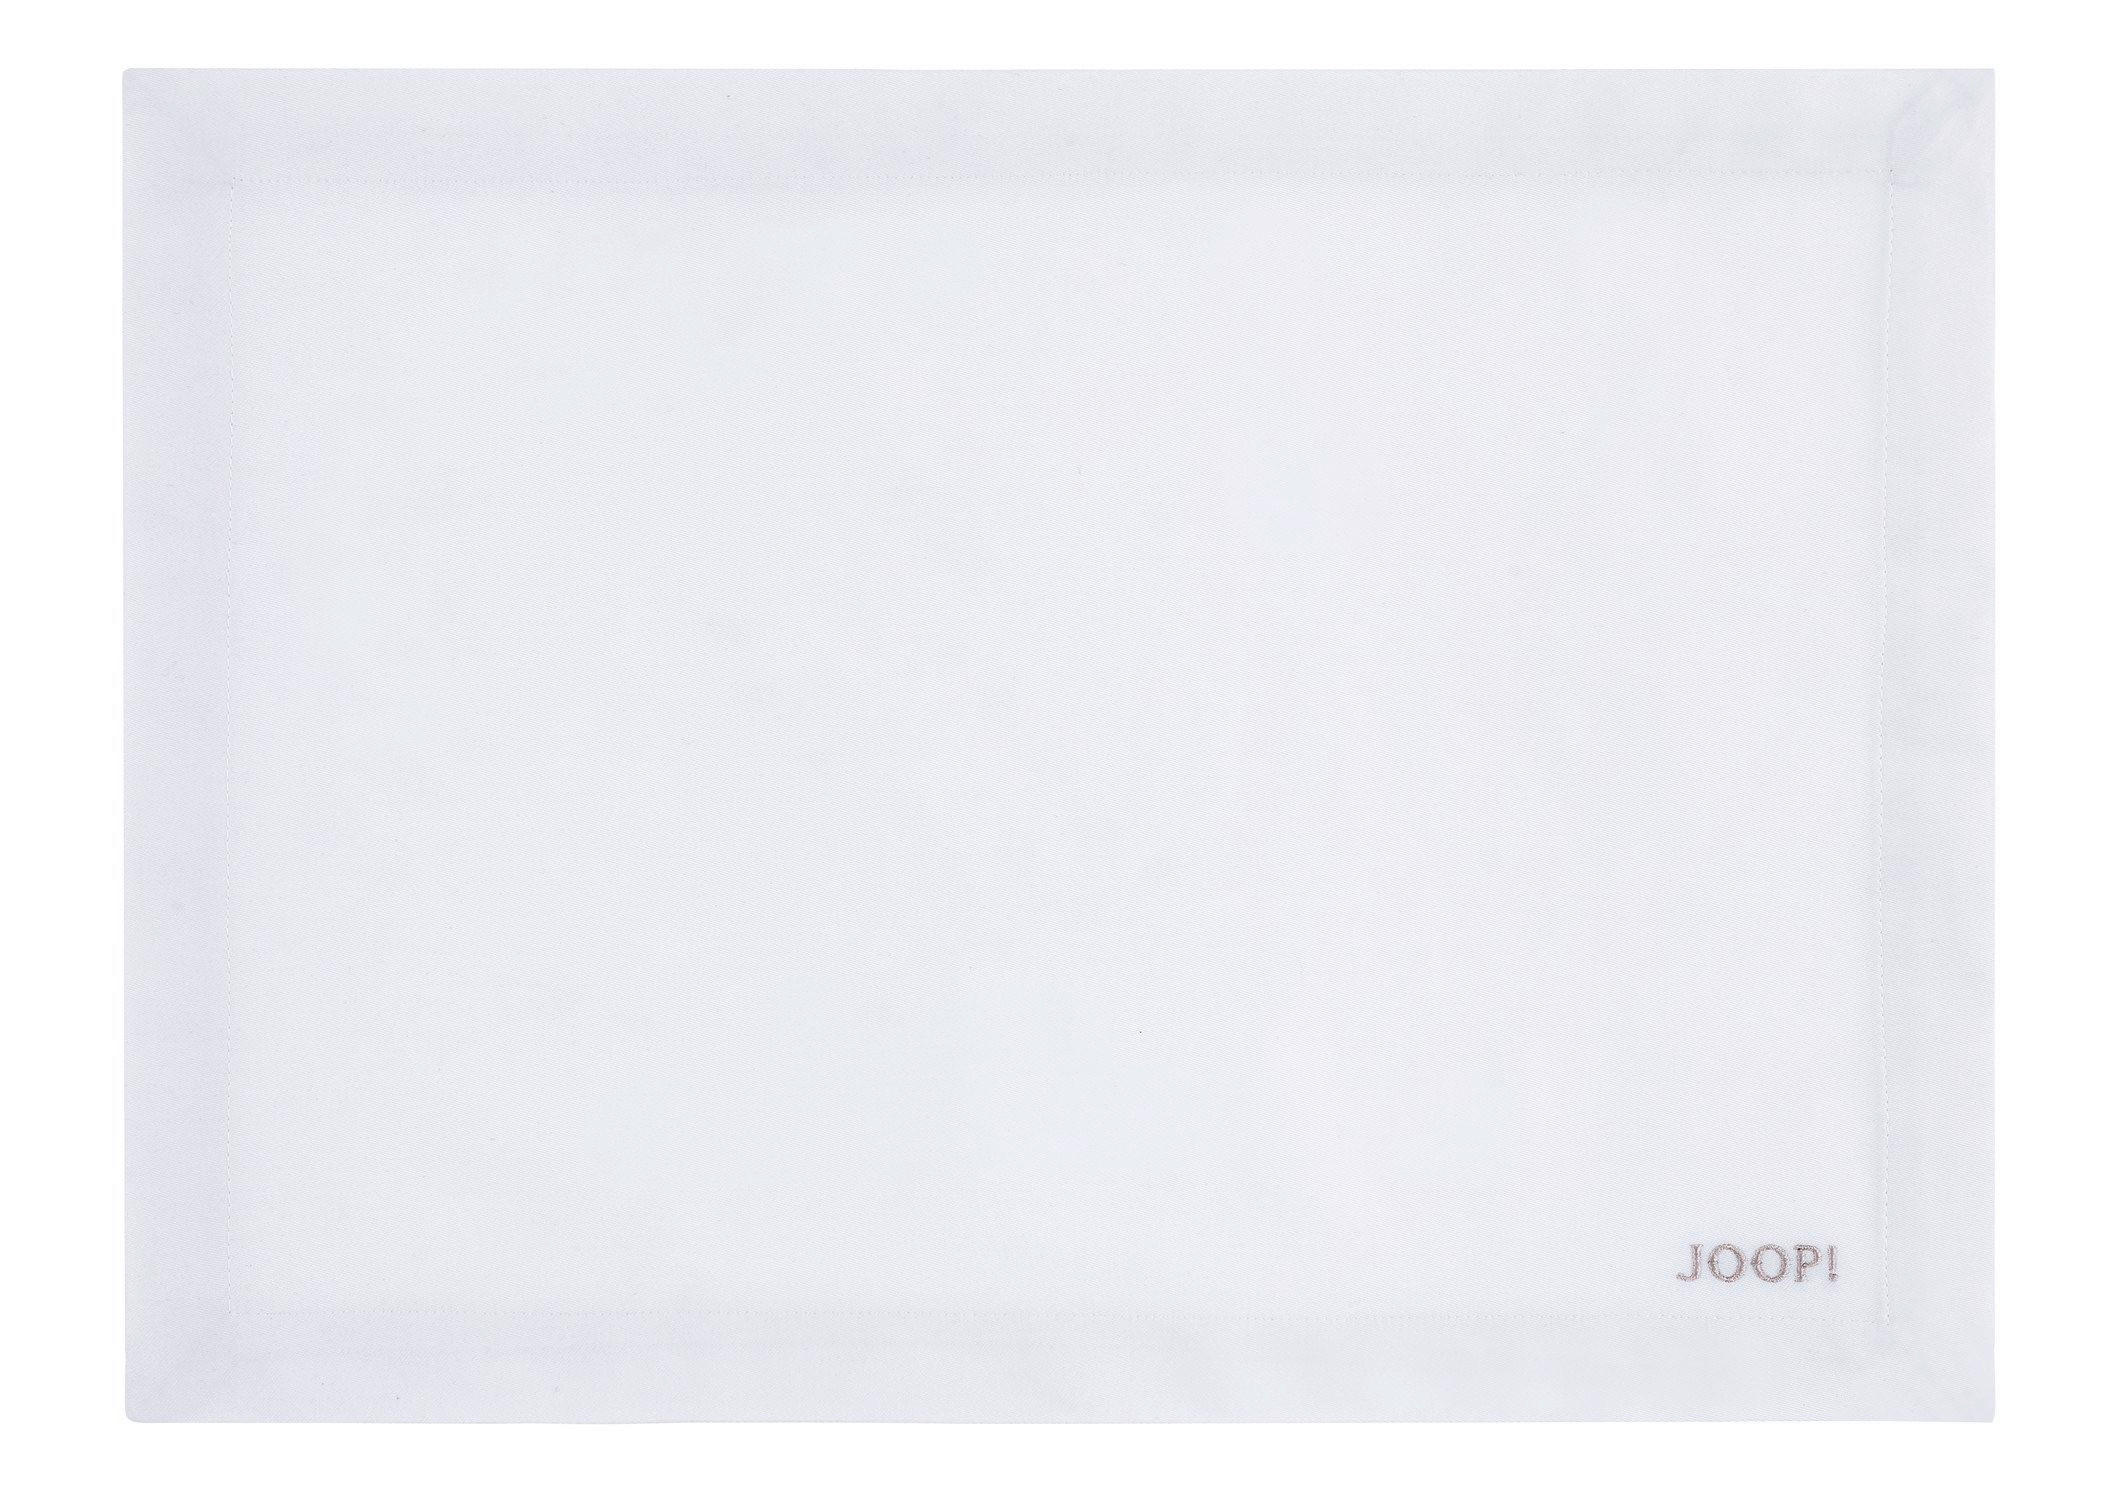 Tischset Joop! 2er Set Textil Weiß, Sandfarben 36/48 cm  - Sandfarben/Weiß, Design, Textil (36/48cm) - Joop!